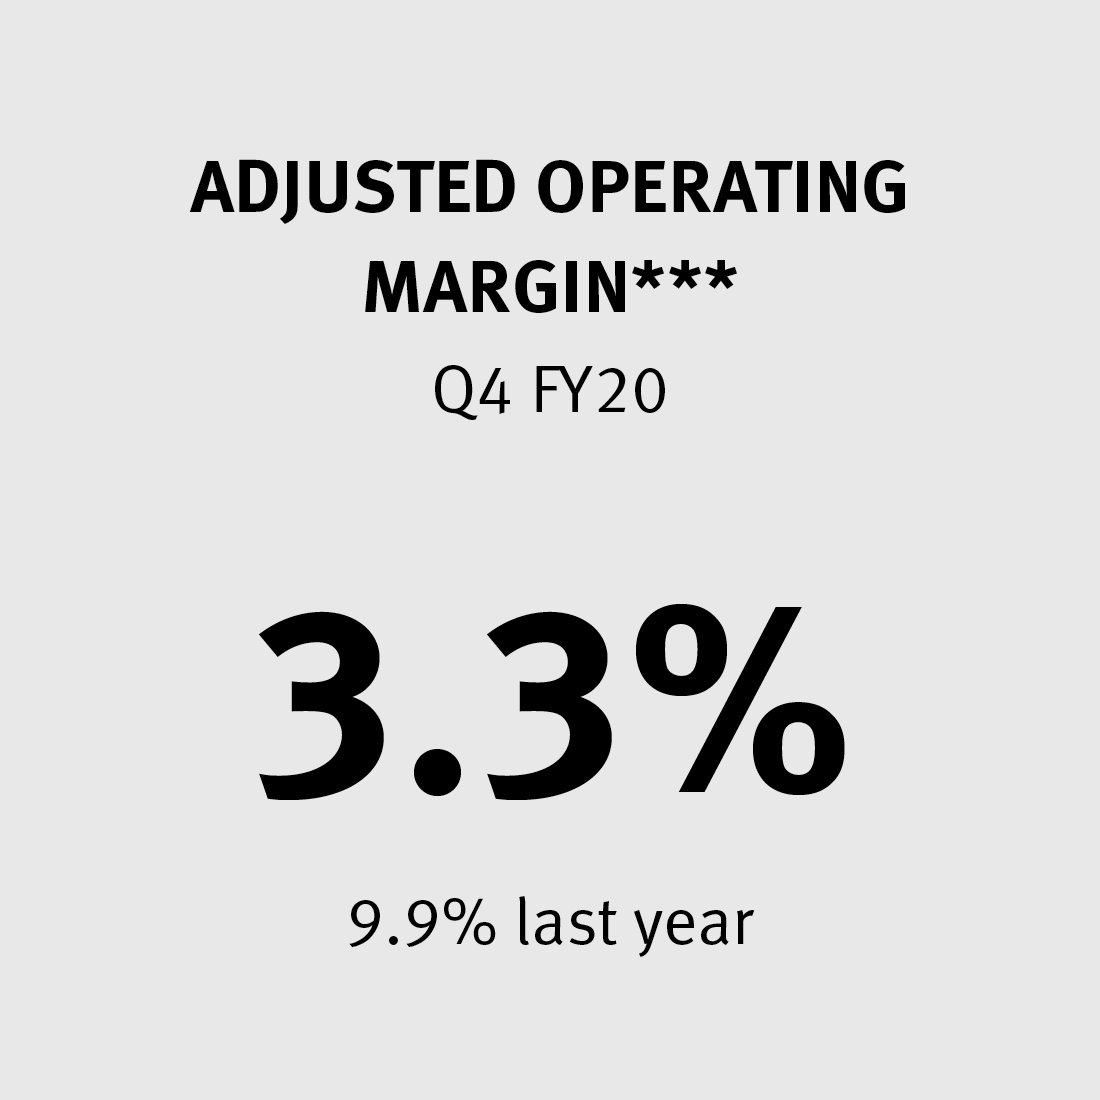 Adjusted Operating Margin 3.3% (9.9% last year)***